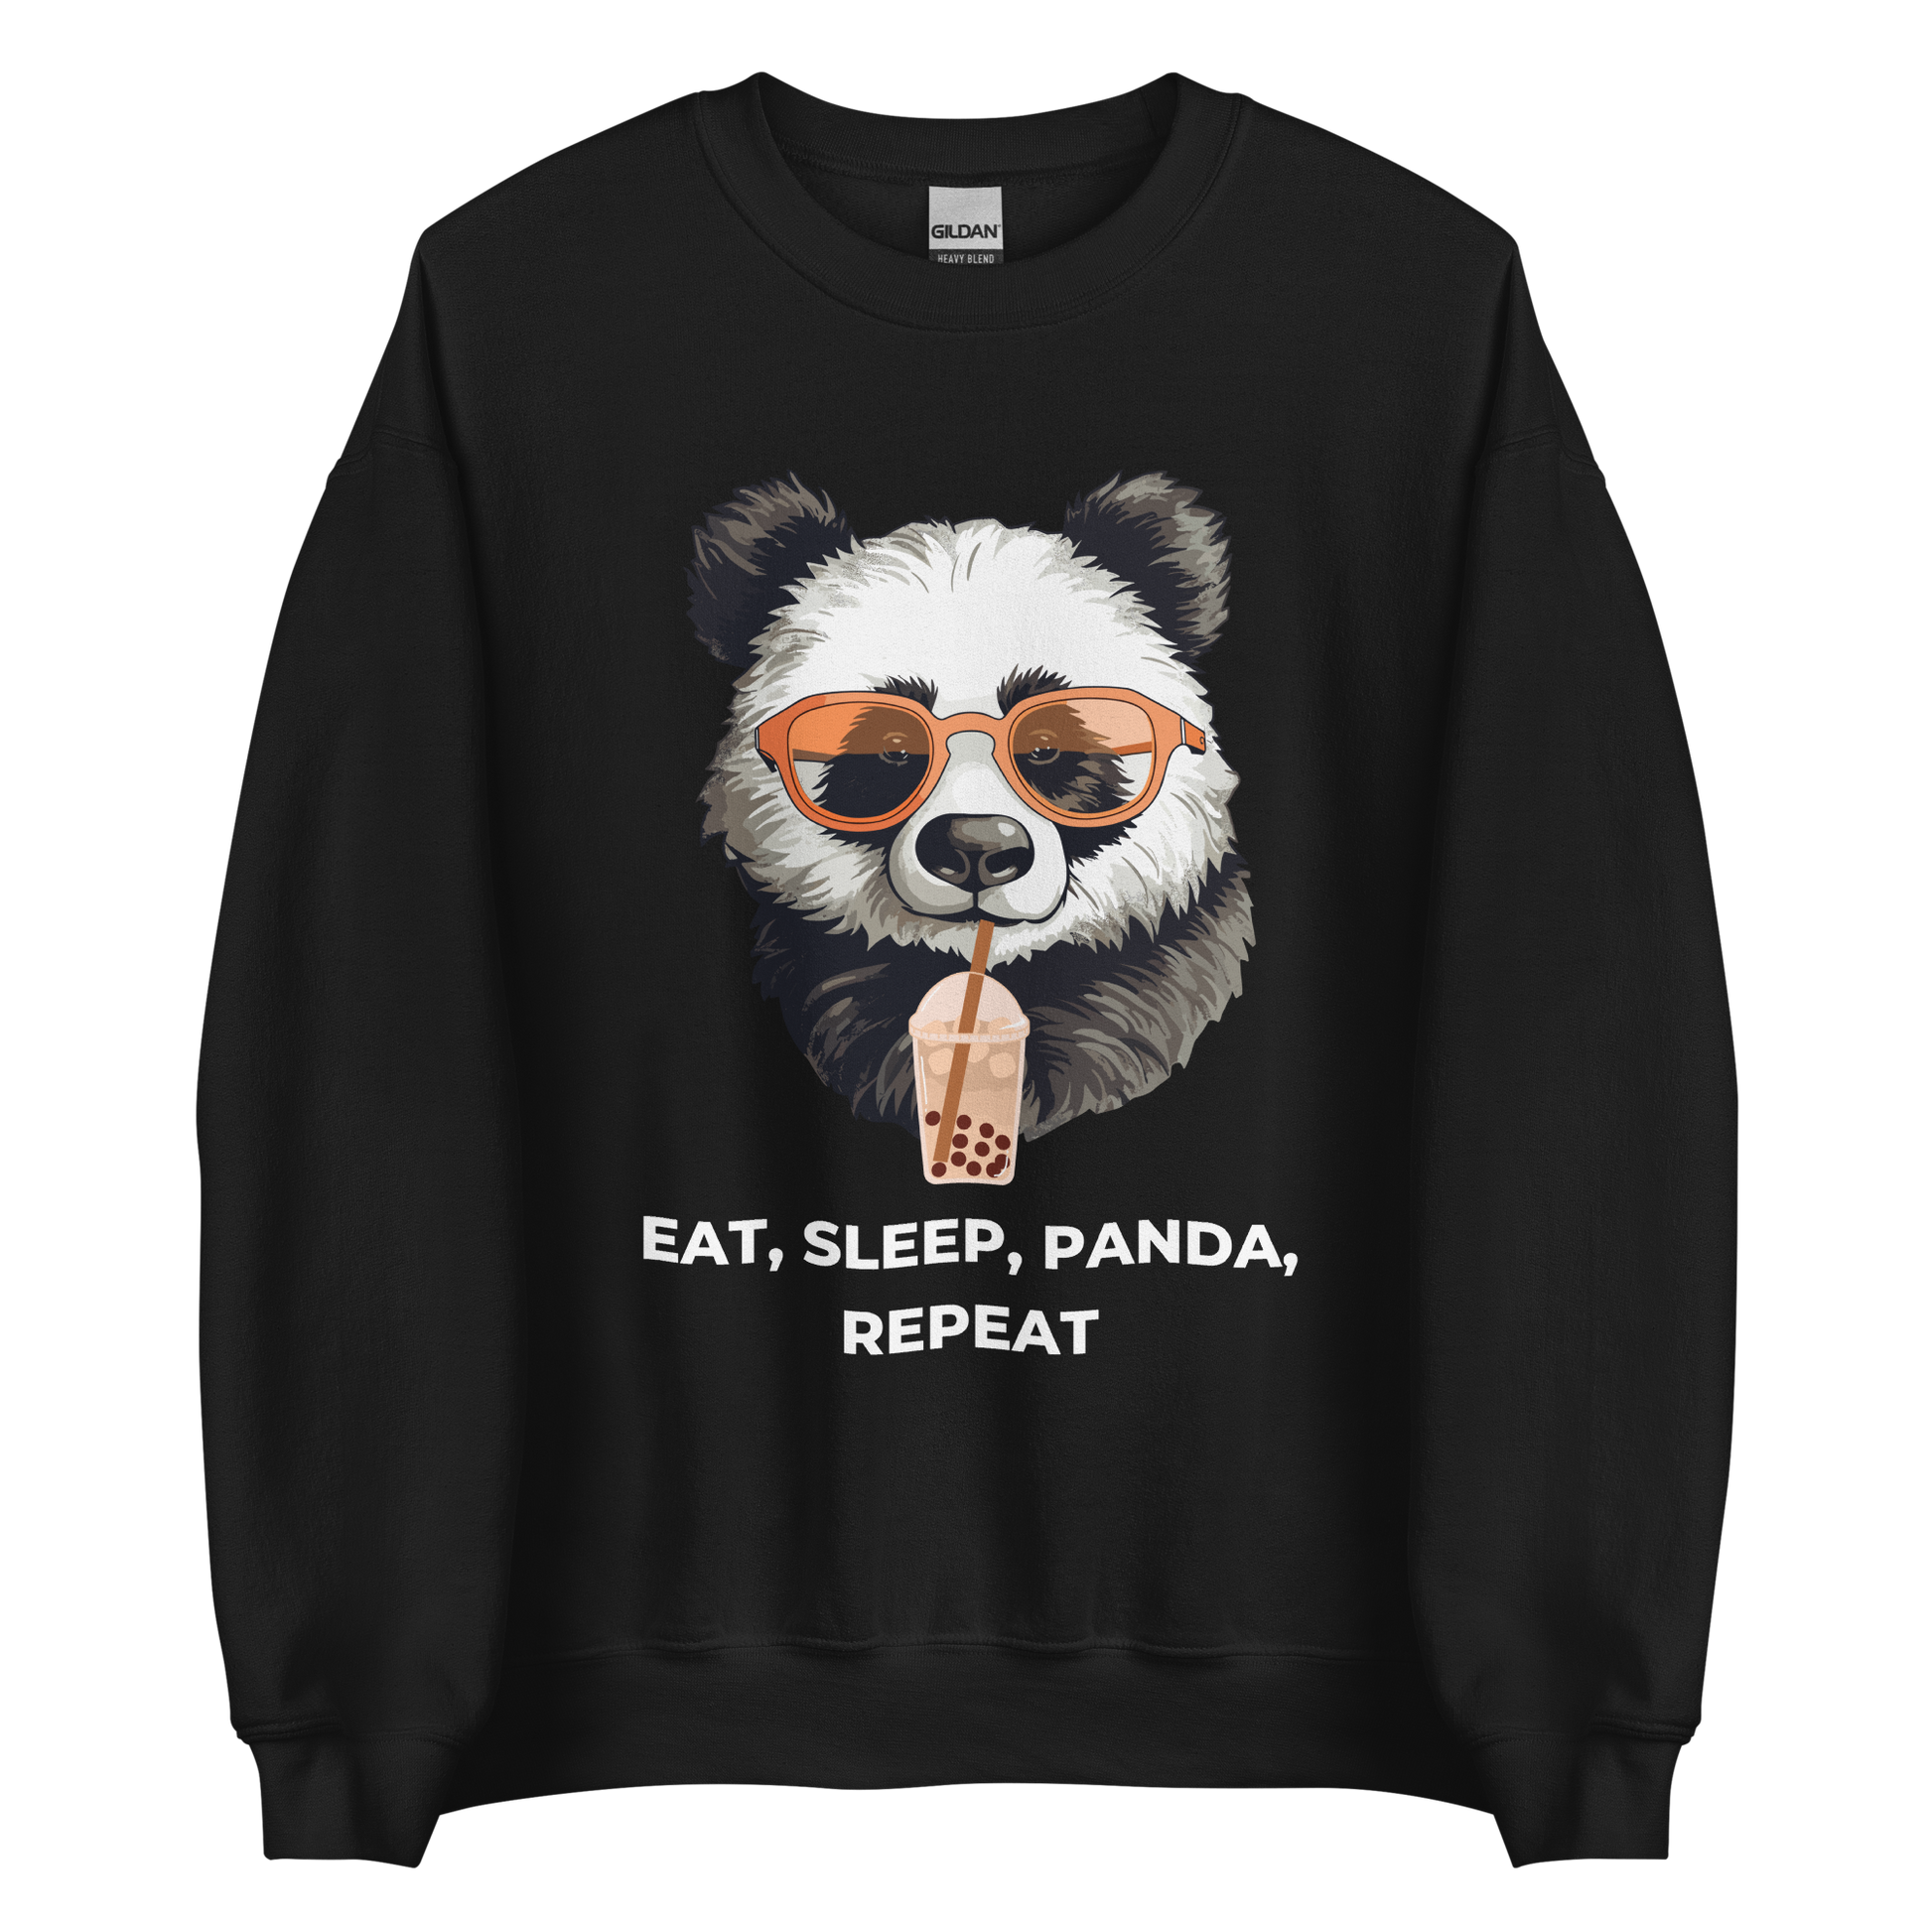 Black Panda Sweatshirt featuring an adorable Eat, Sleep, Panda, Repeat graphic on the chest - Funny Graphic Panda Sweatshirts - Boozy Fox